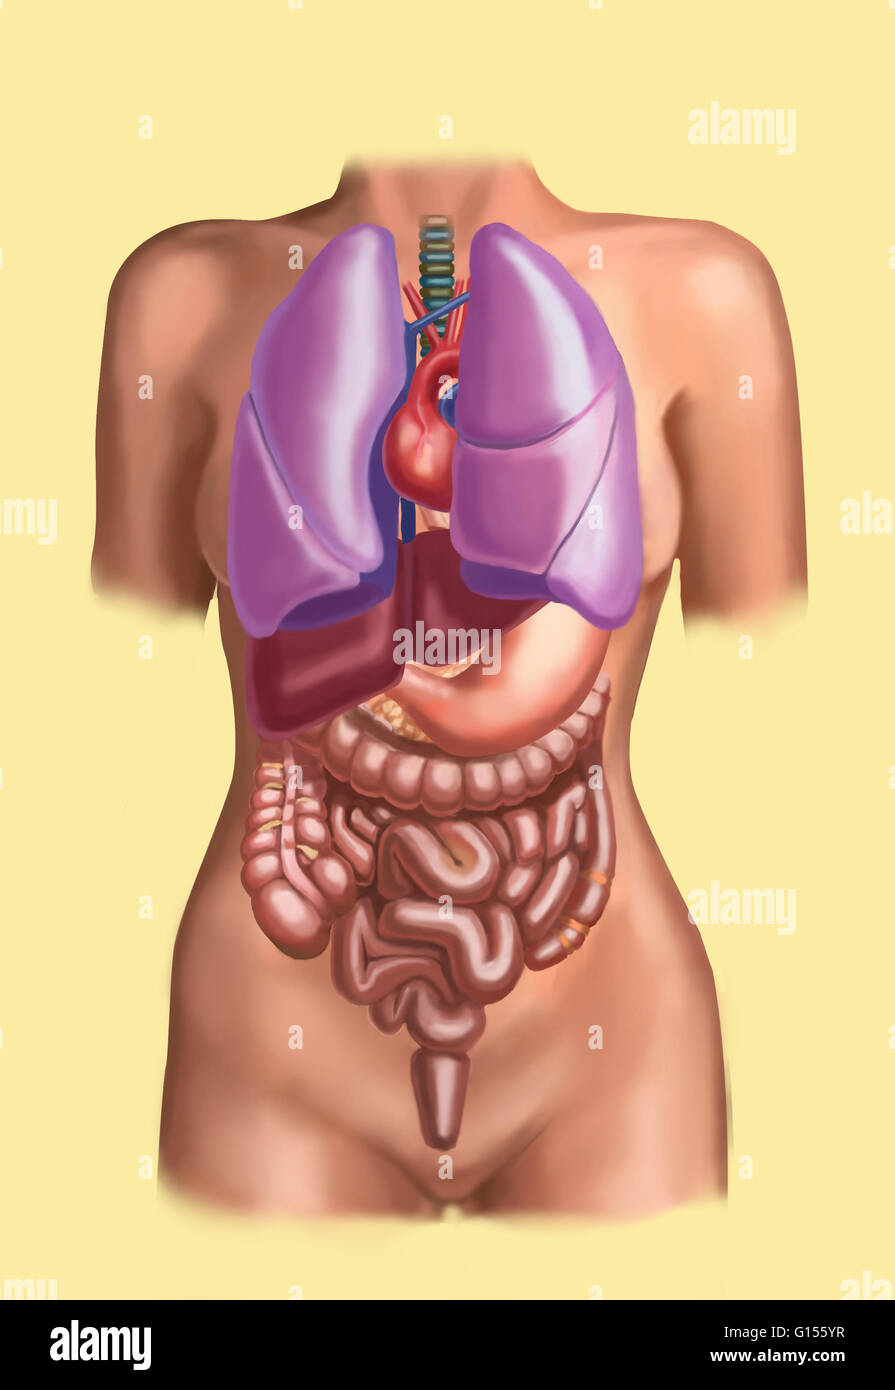 Human organ set. Heart, brain, lungs, liver, stomach, intestines